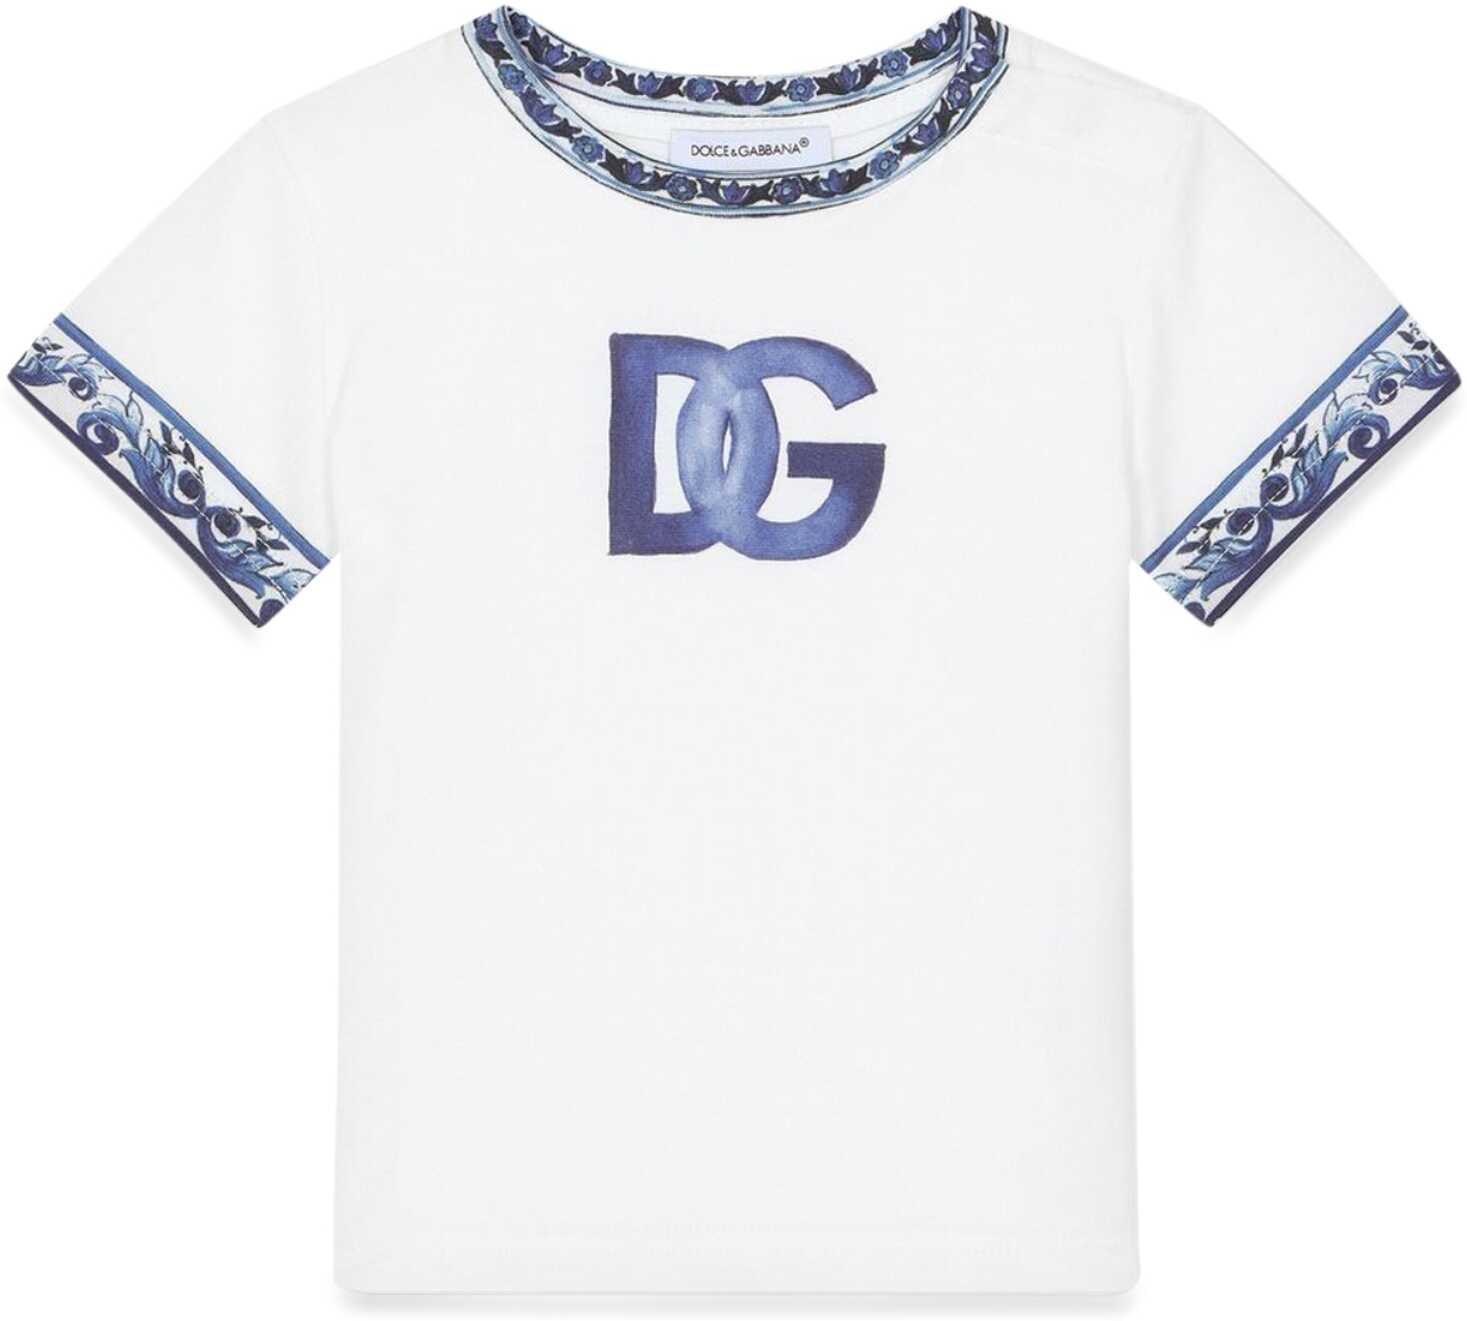 Poze Dolce & Gabbana T-Shirt Tris Majolica WHITE